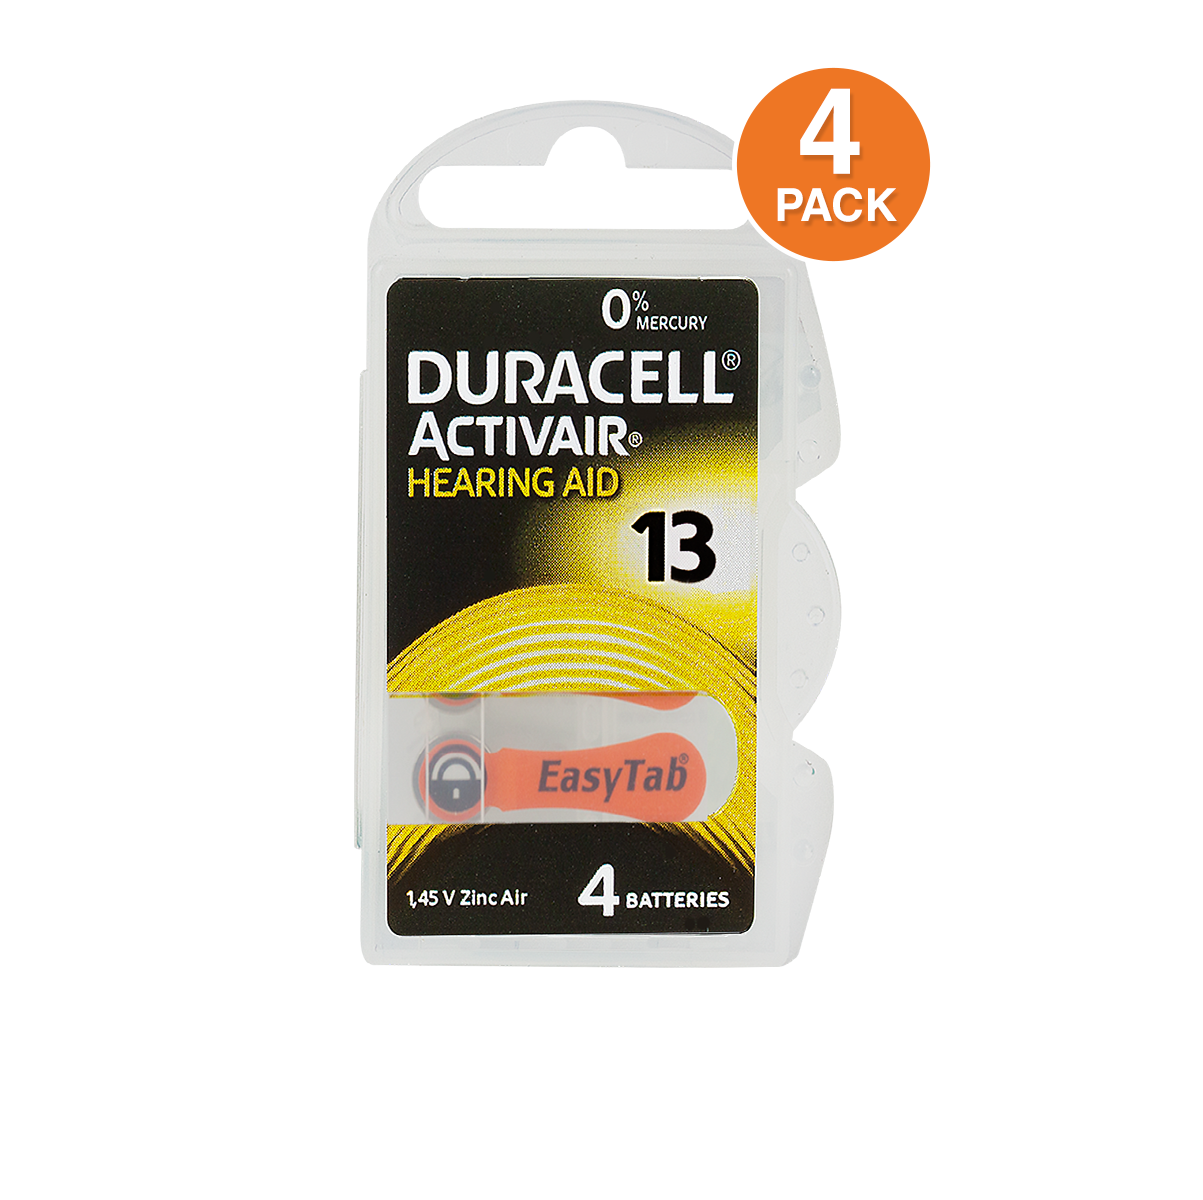 Duracell Activair 13 Hearing Aid Battery (4 PCS) 